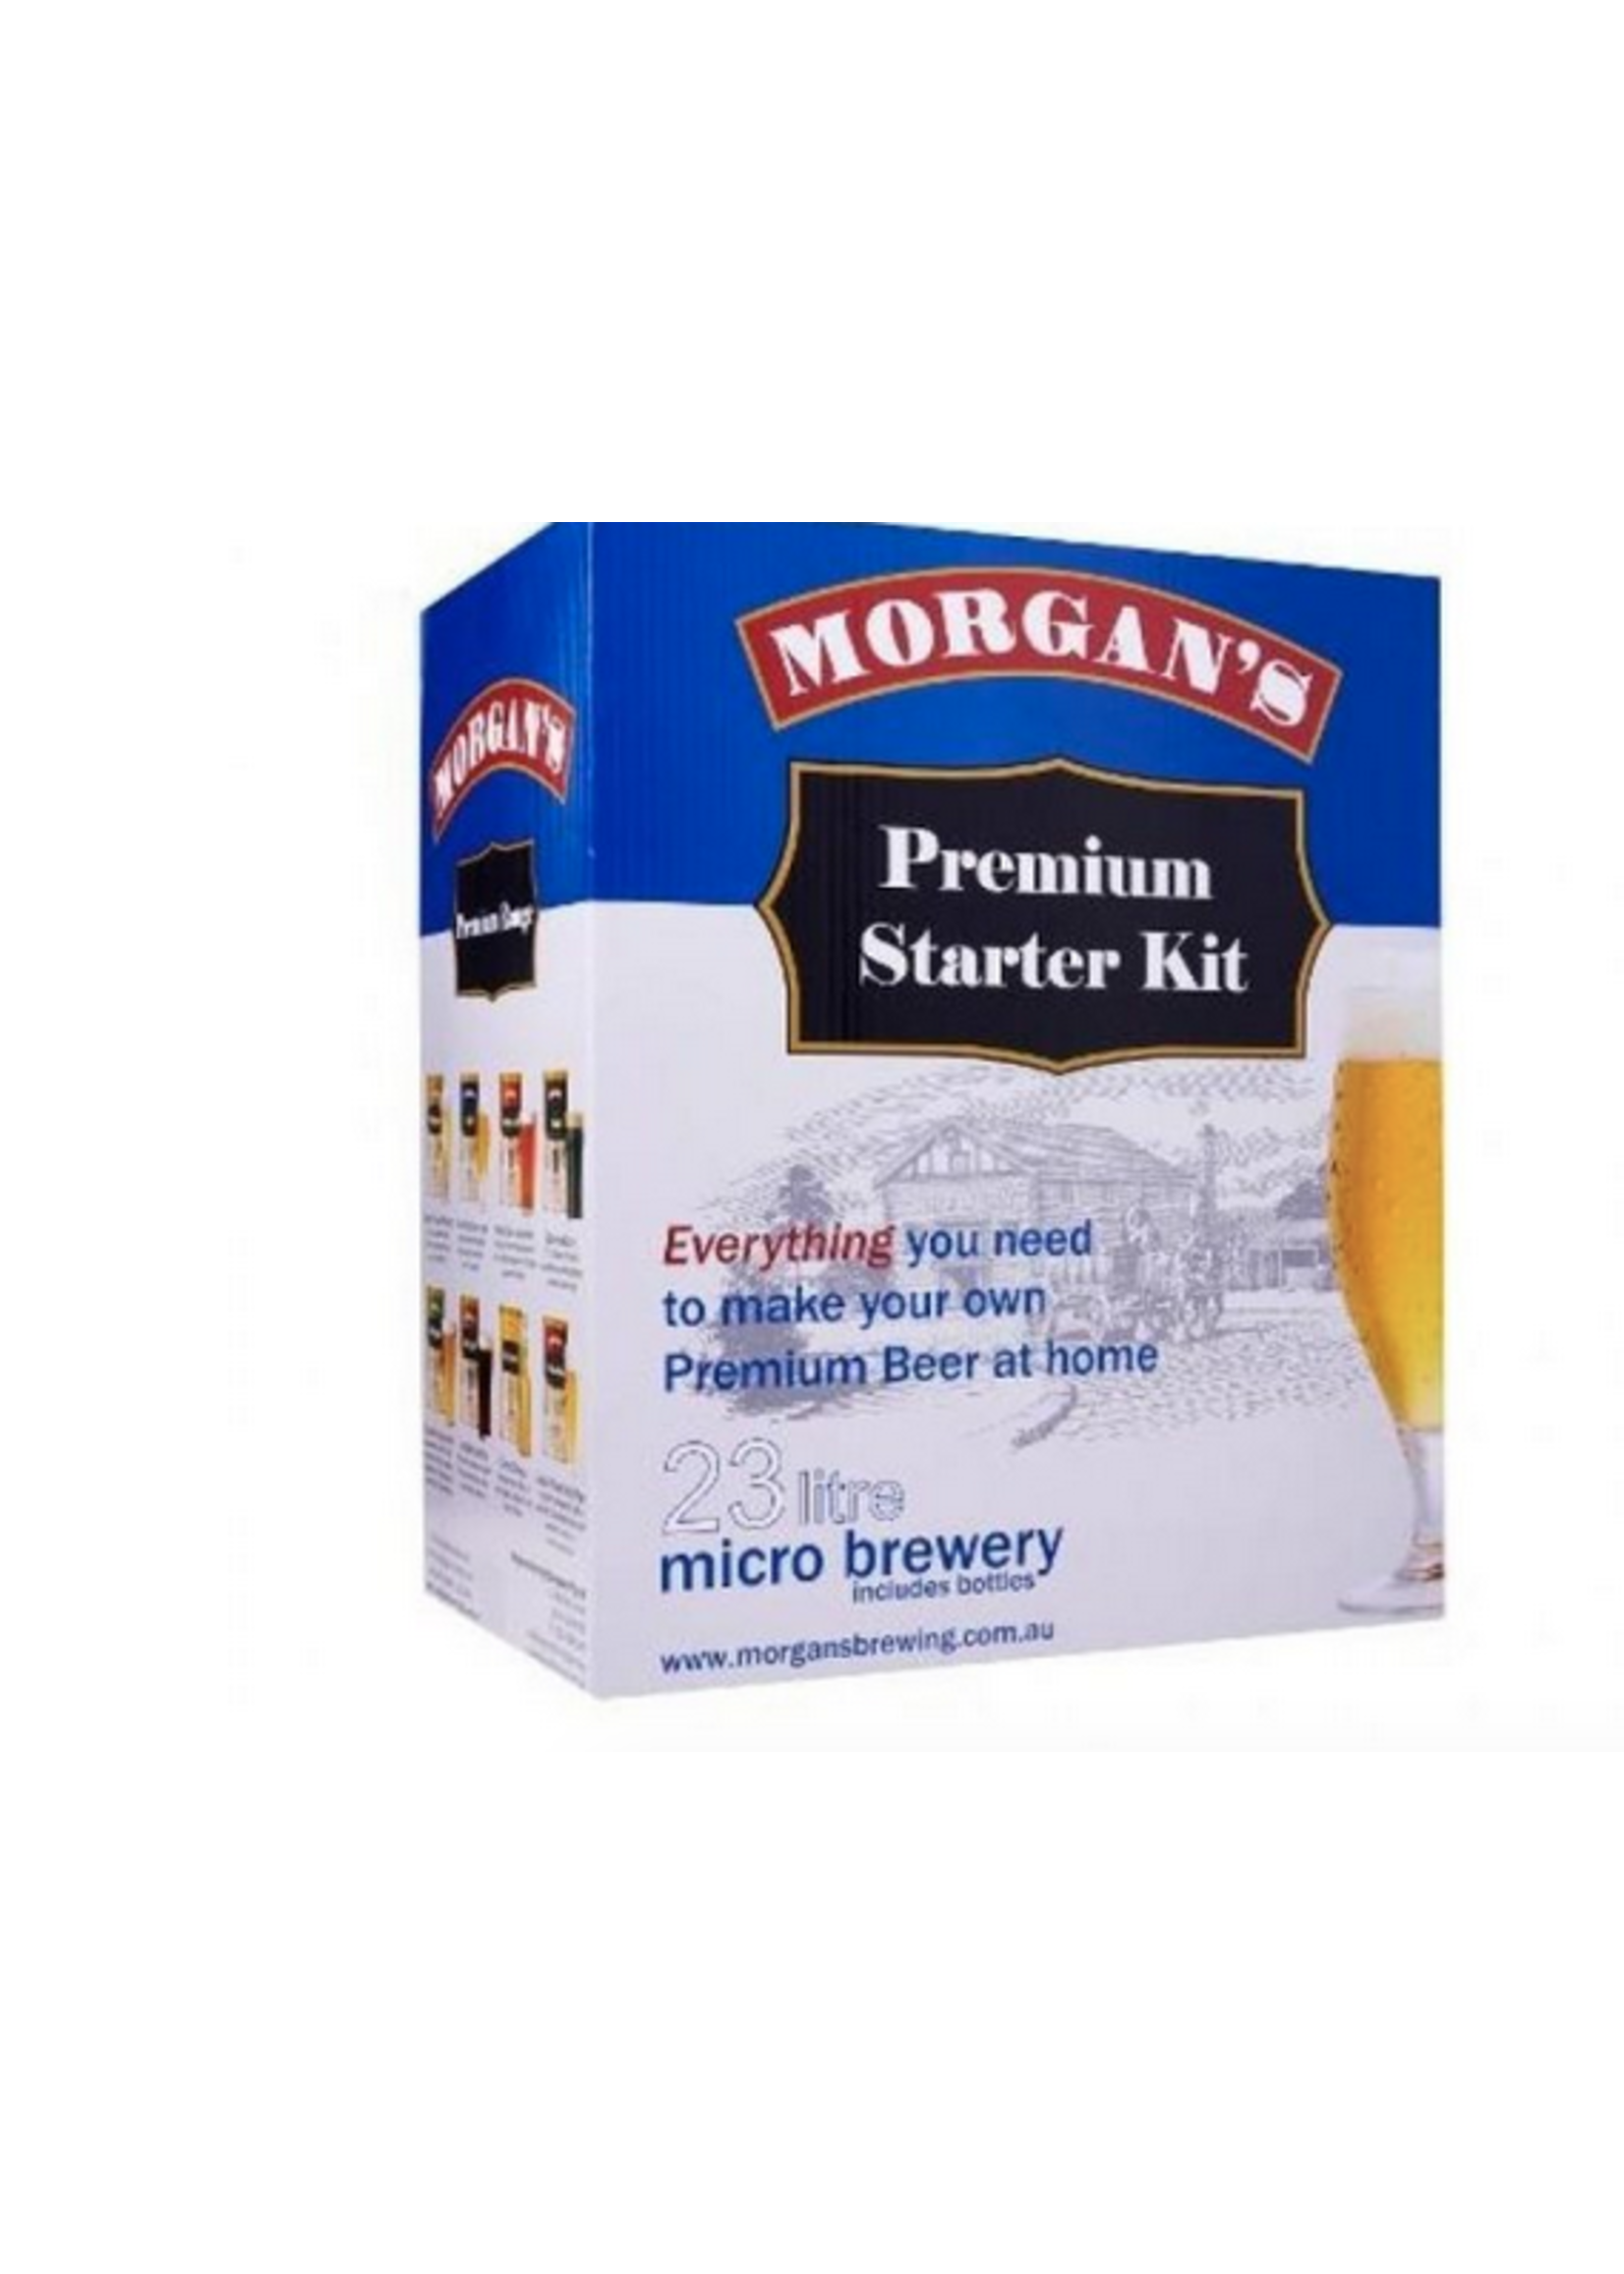 Morgan's Morgans Premium starter Kit